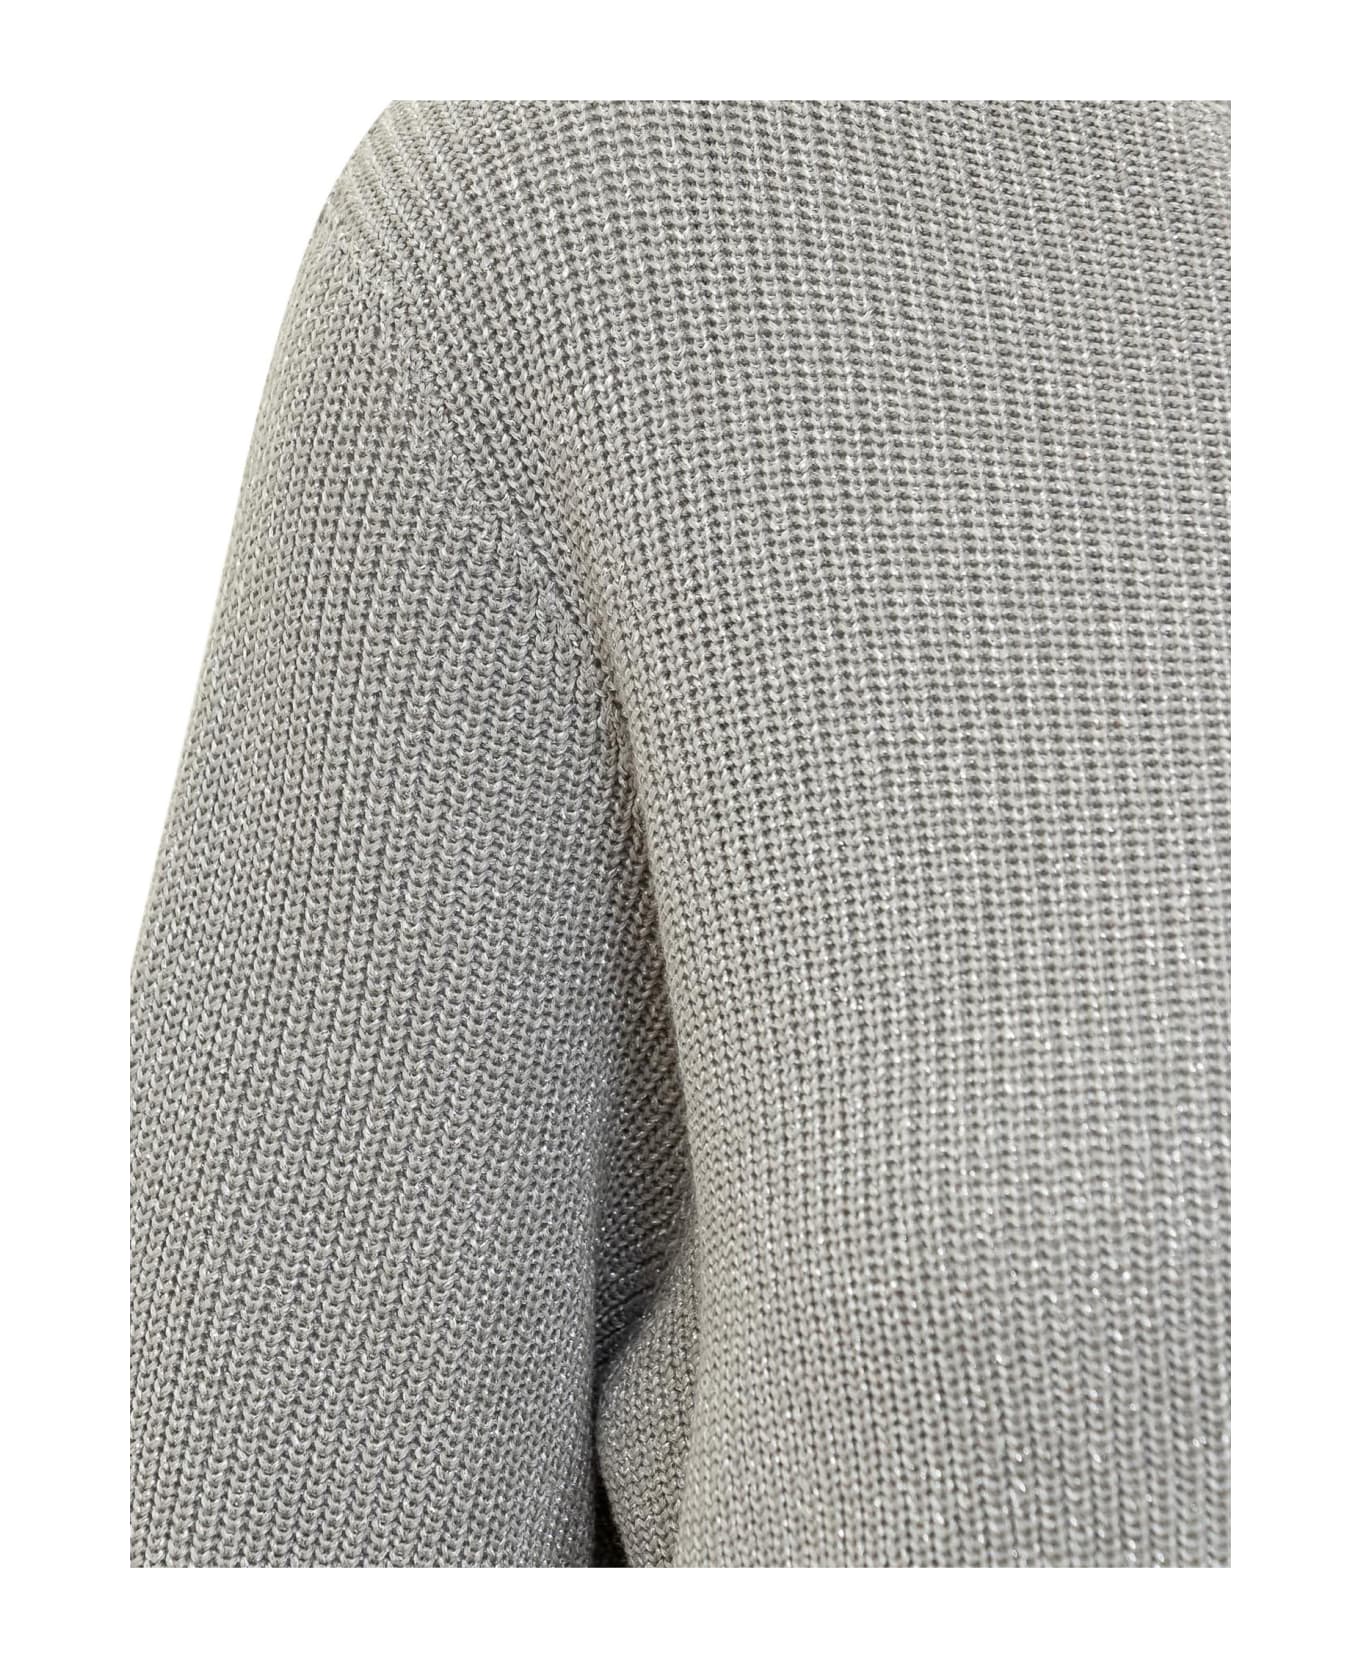 Fabiana Filippi Sweater - Grey